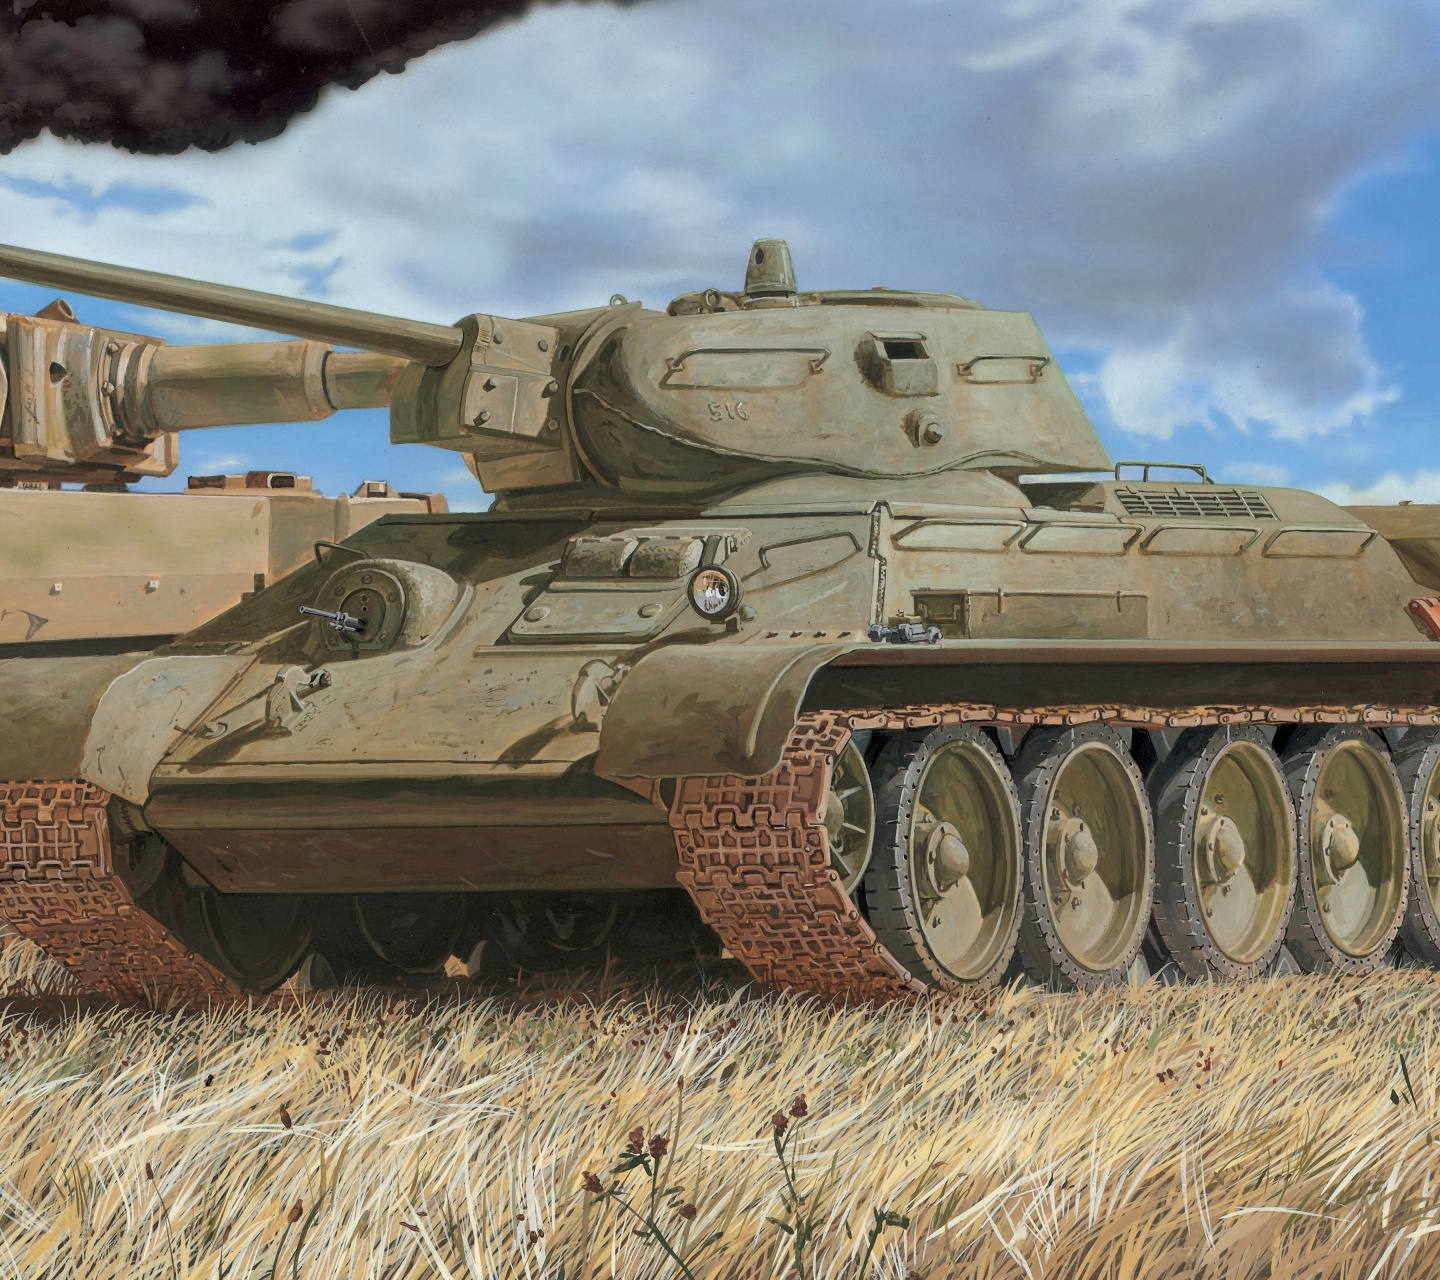 Tank T-34